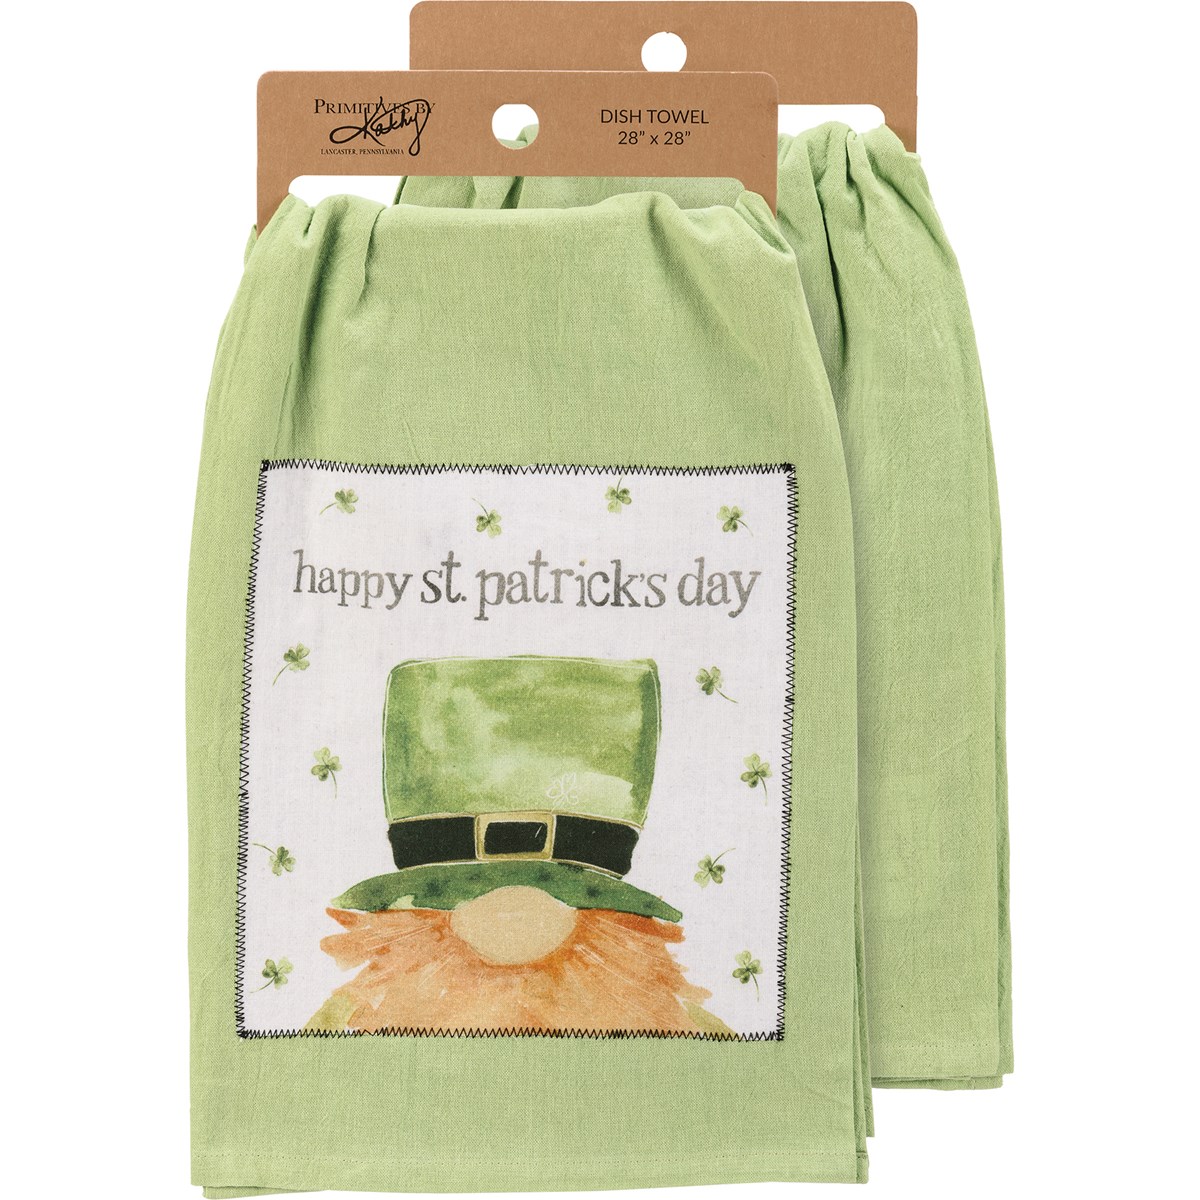 Happy St. Patrick's Day Kitchen Towel - Cotton